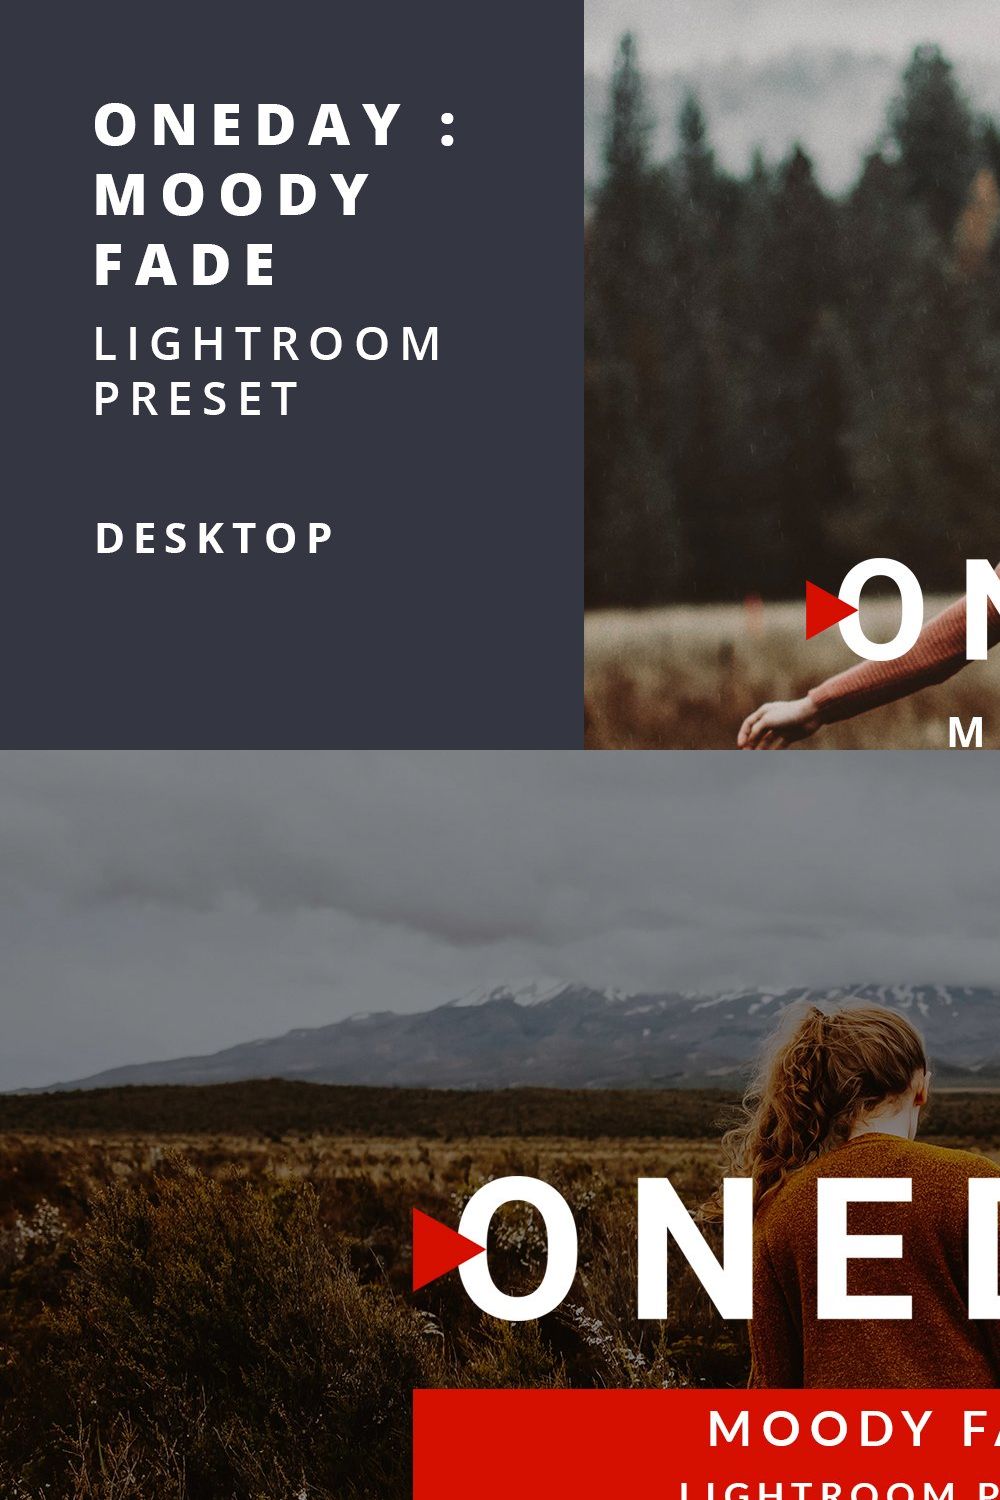 Oneday : Moody Fade Lightroom preset pinterest preview image.